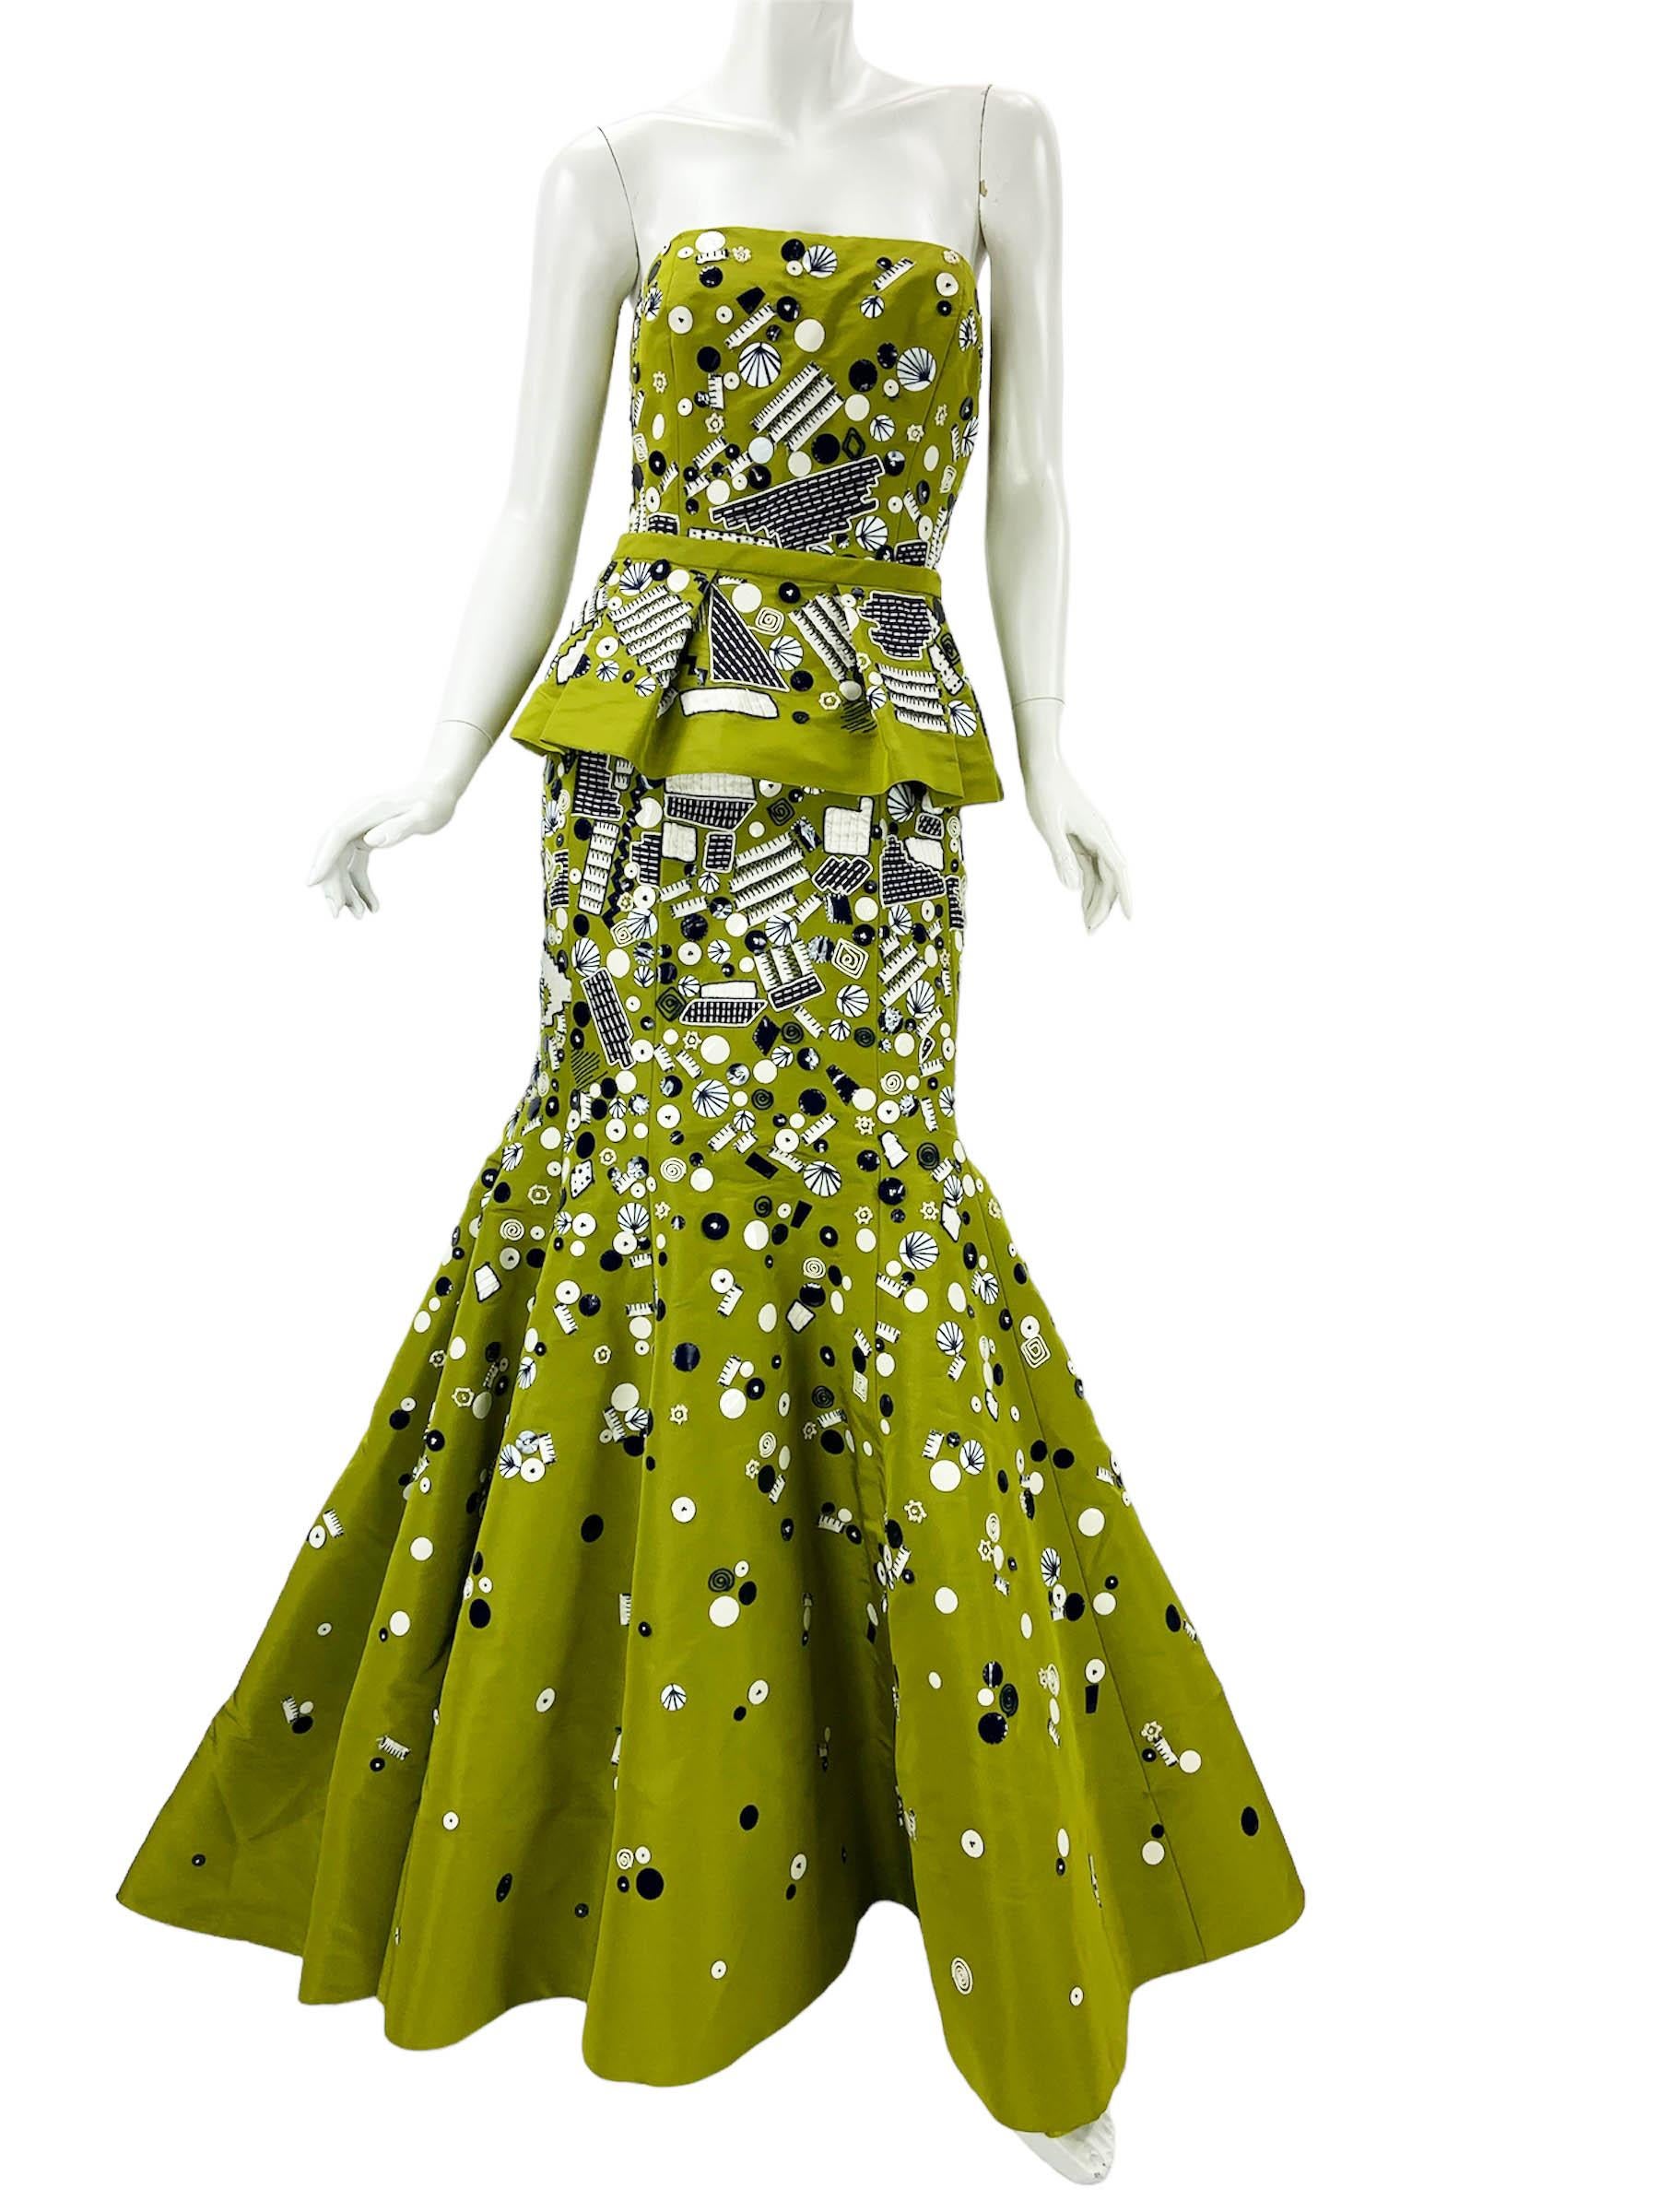 NWT Oscar de la Renta S/S 2009 Green Embellished Silk Taffeta Peplum Dress US 10 For Sale 1